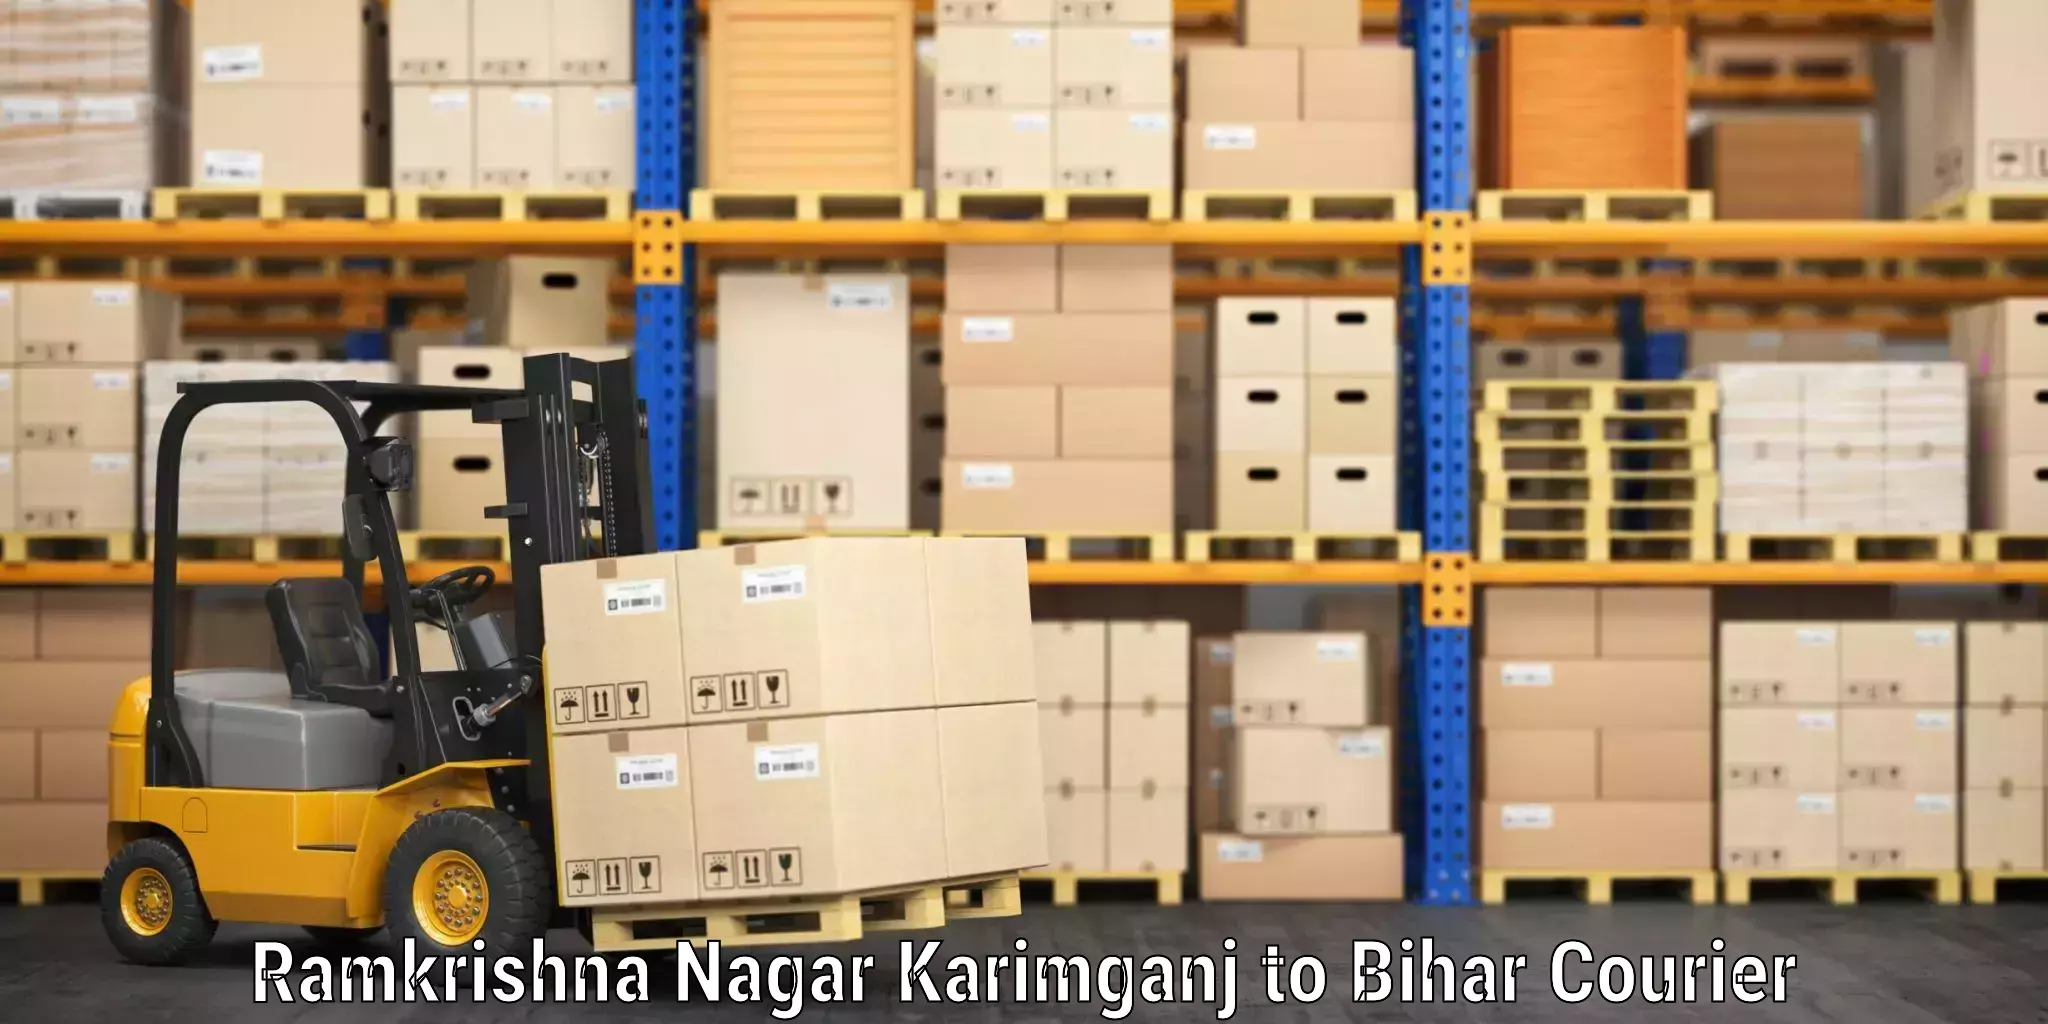 Luggage delivery app Ramkrishna Nagar Karimganj to Bihar